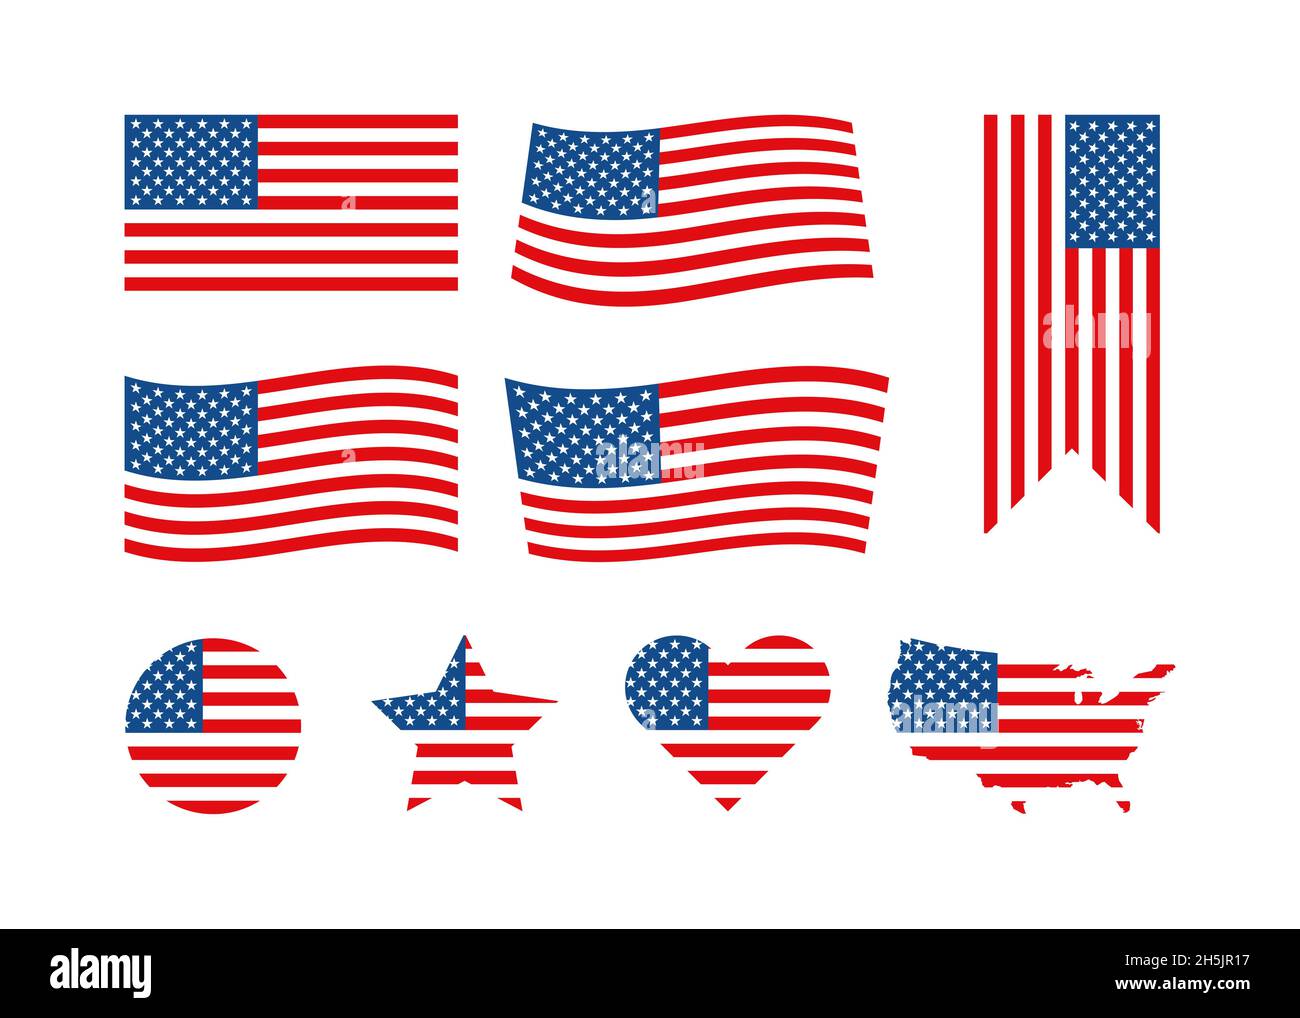 Flag USA setzt ein isoliertes Vektorsymbol in flacher Form. United States of America National Flag Symbole gesetzt. Amerikanisches Produktemblem, Abbildung. Stockfoto